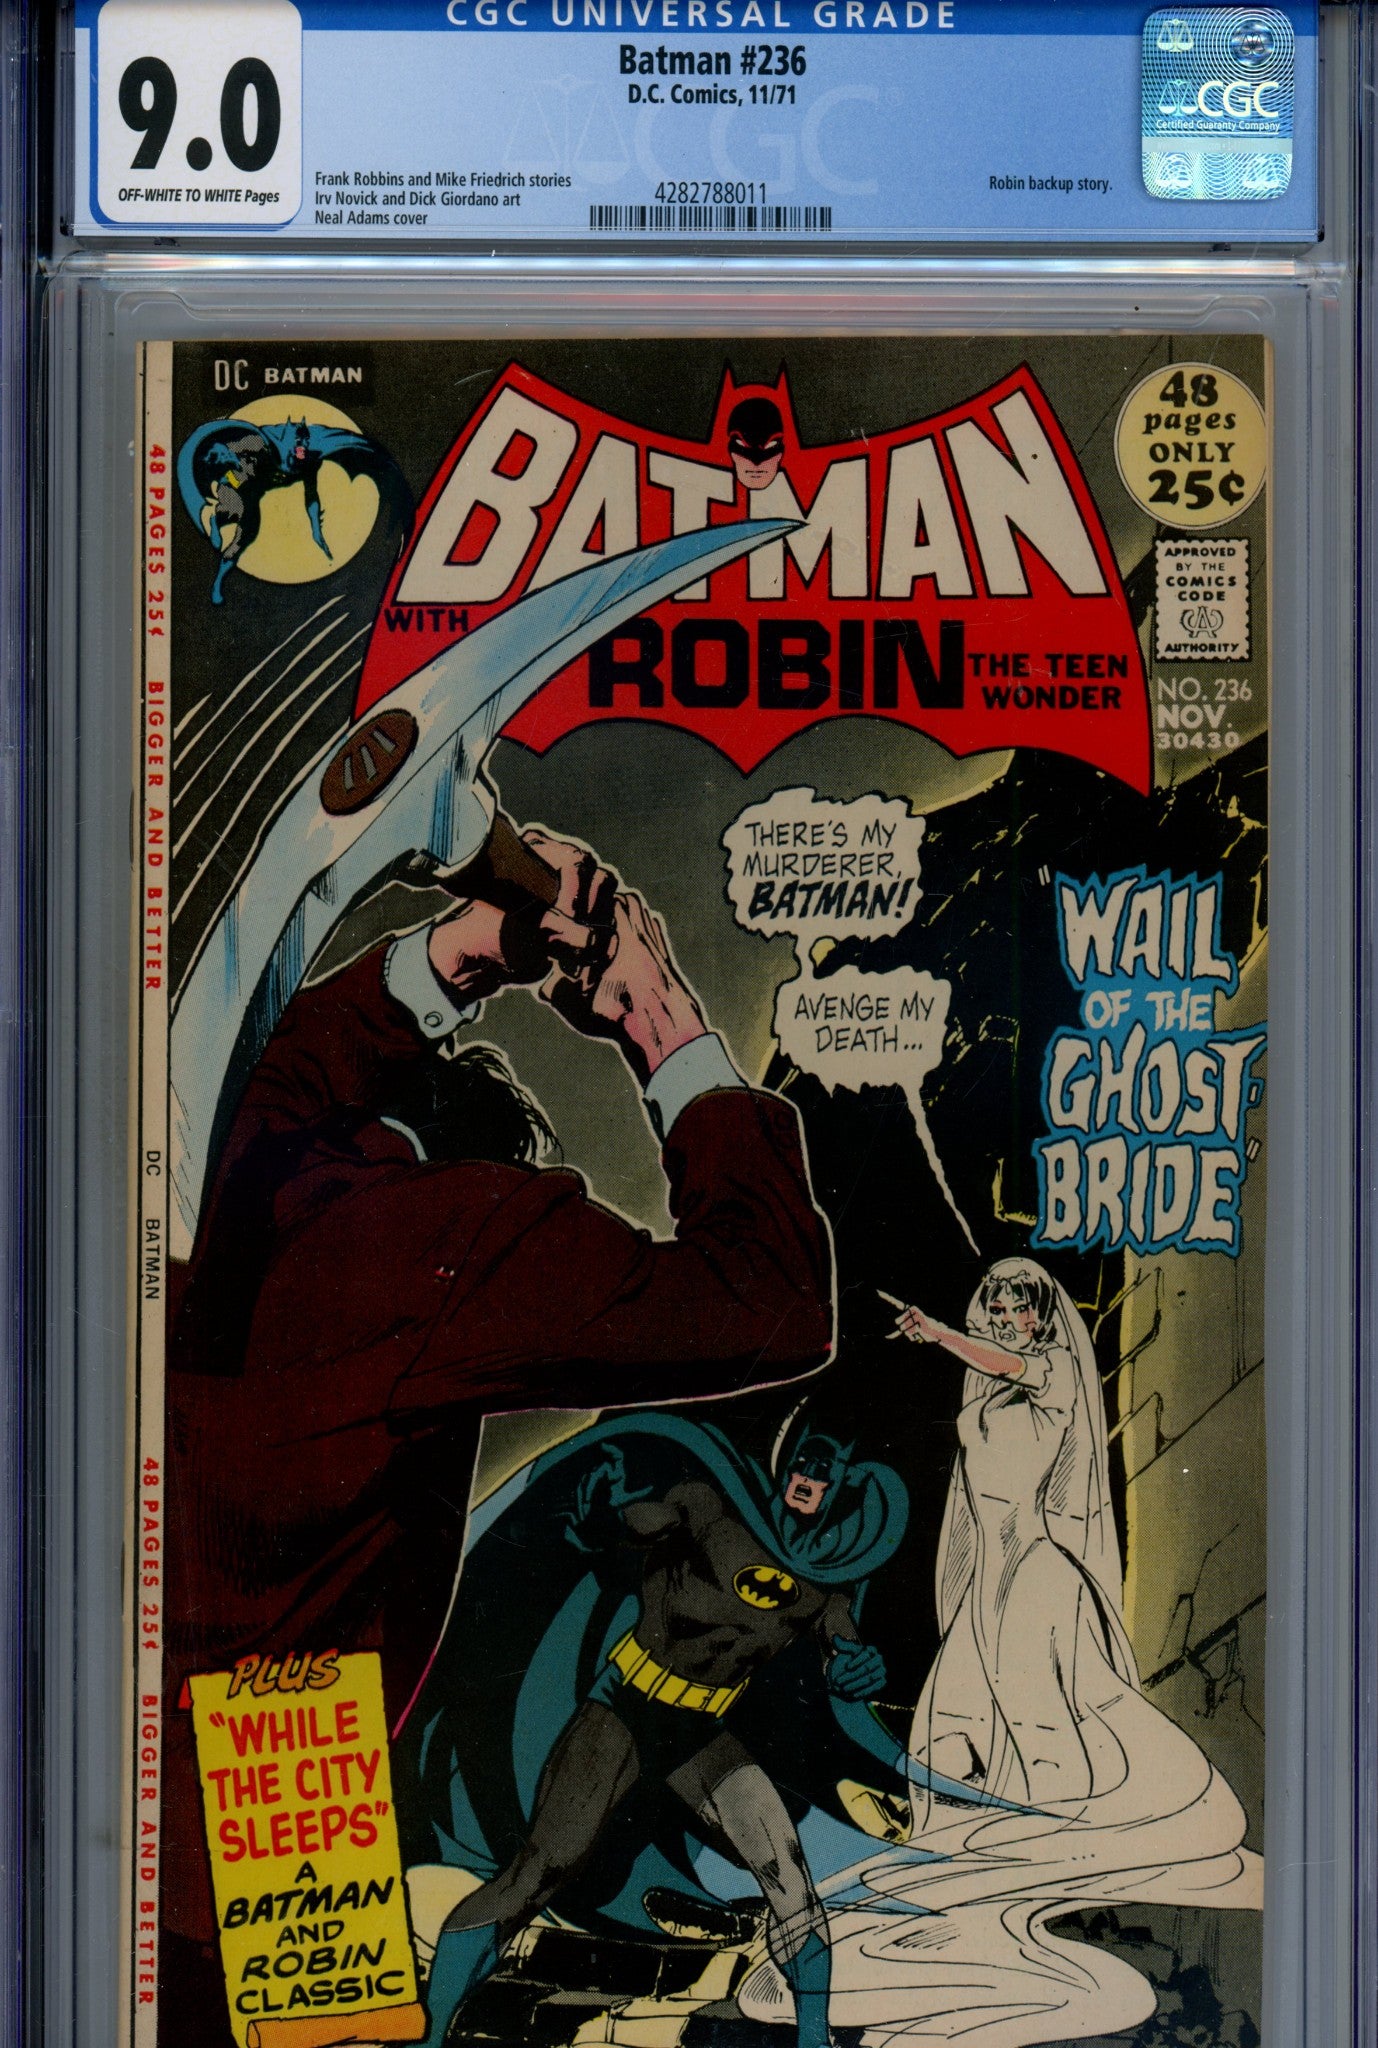 Batman Vol 1 236 CGC 9.0 (VF/NM) (1971) 